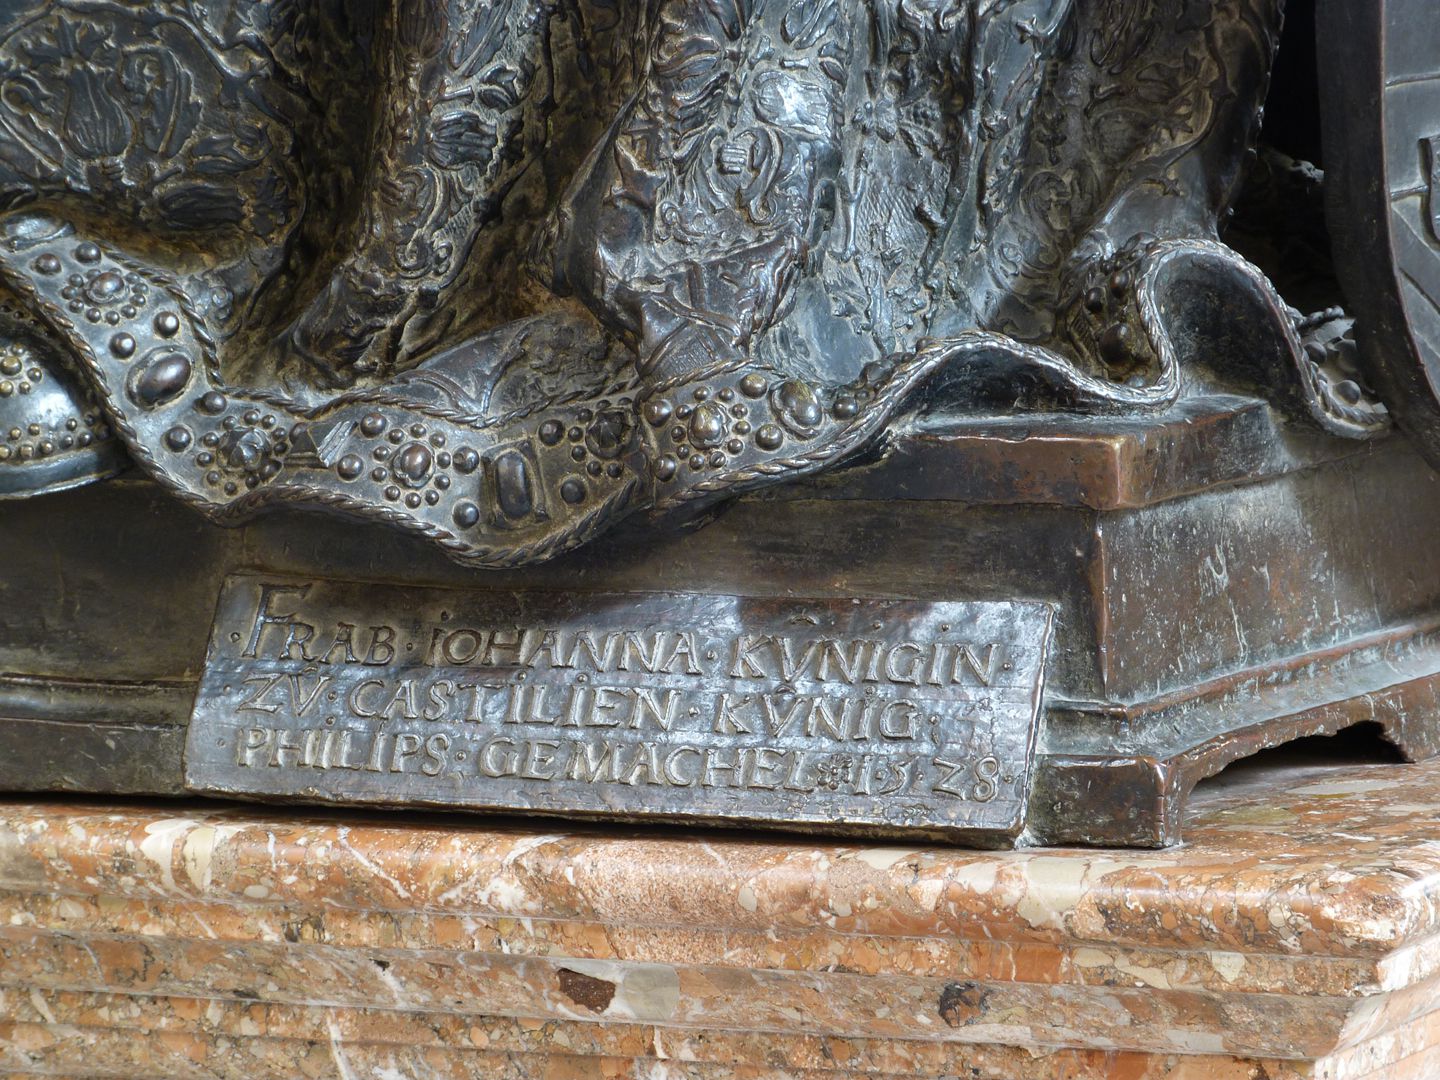 Joan of Castile (Innsbruck) Pedestal with Inscription: FRAB . IOHANNA . KVNIGIN ./. ZV CASTILIEN . KVNIG ./. PHILIPS . GEMACHEL .1.5.2.8.